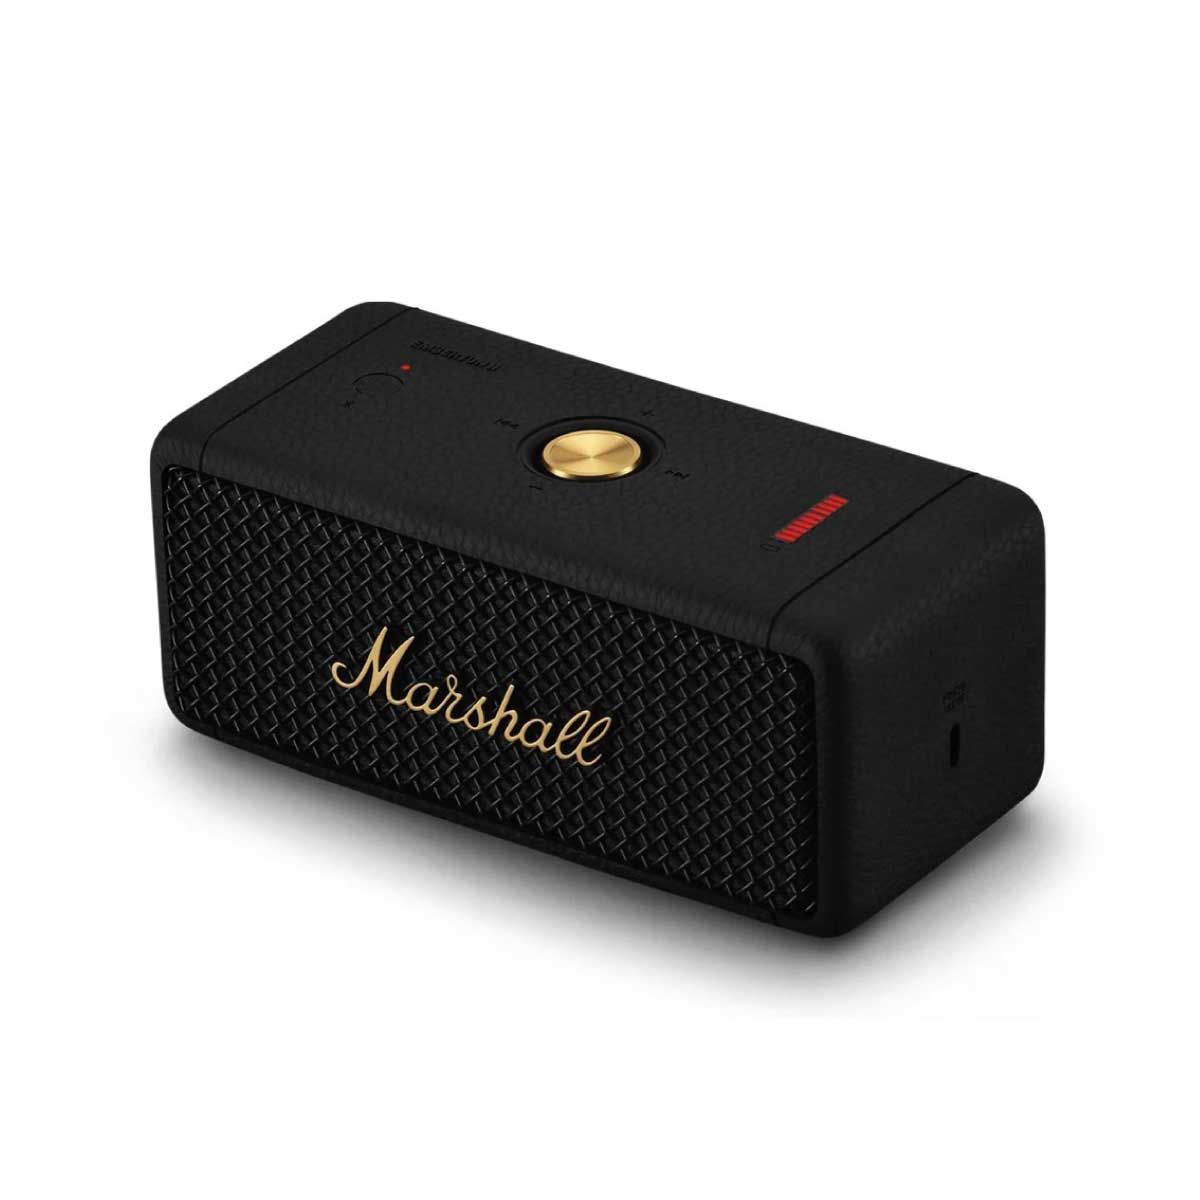 Marshall Bluetooth Speaker รุ่น EMBERTON II BLACK ลำโพงบลูทูธพกพา